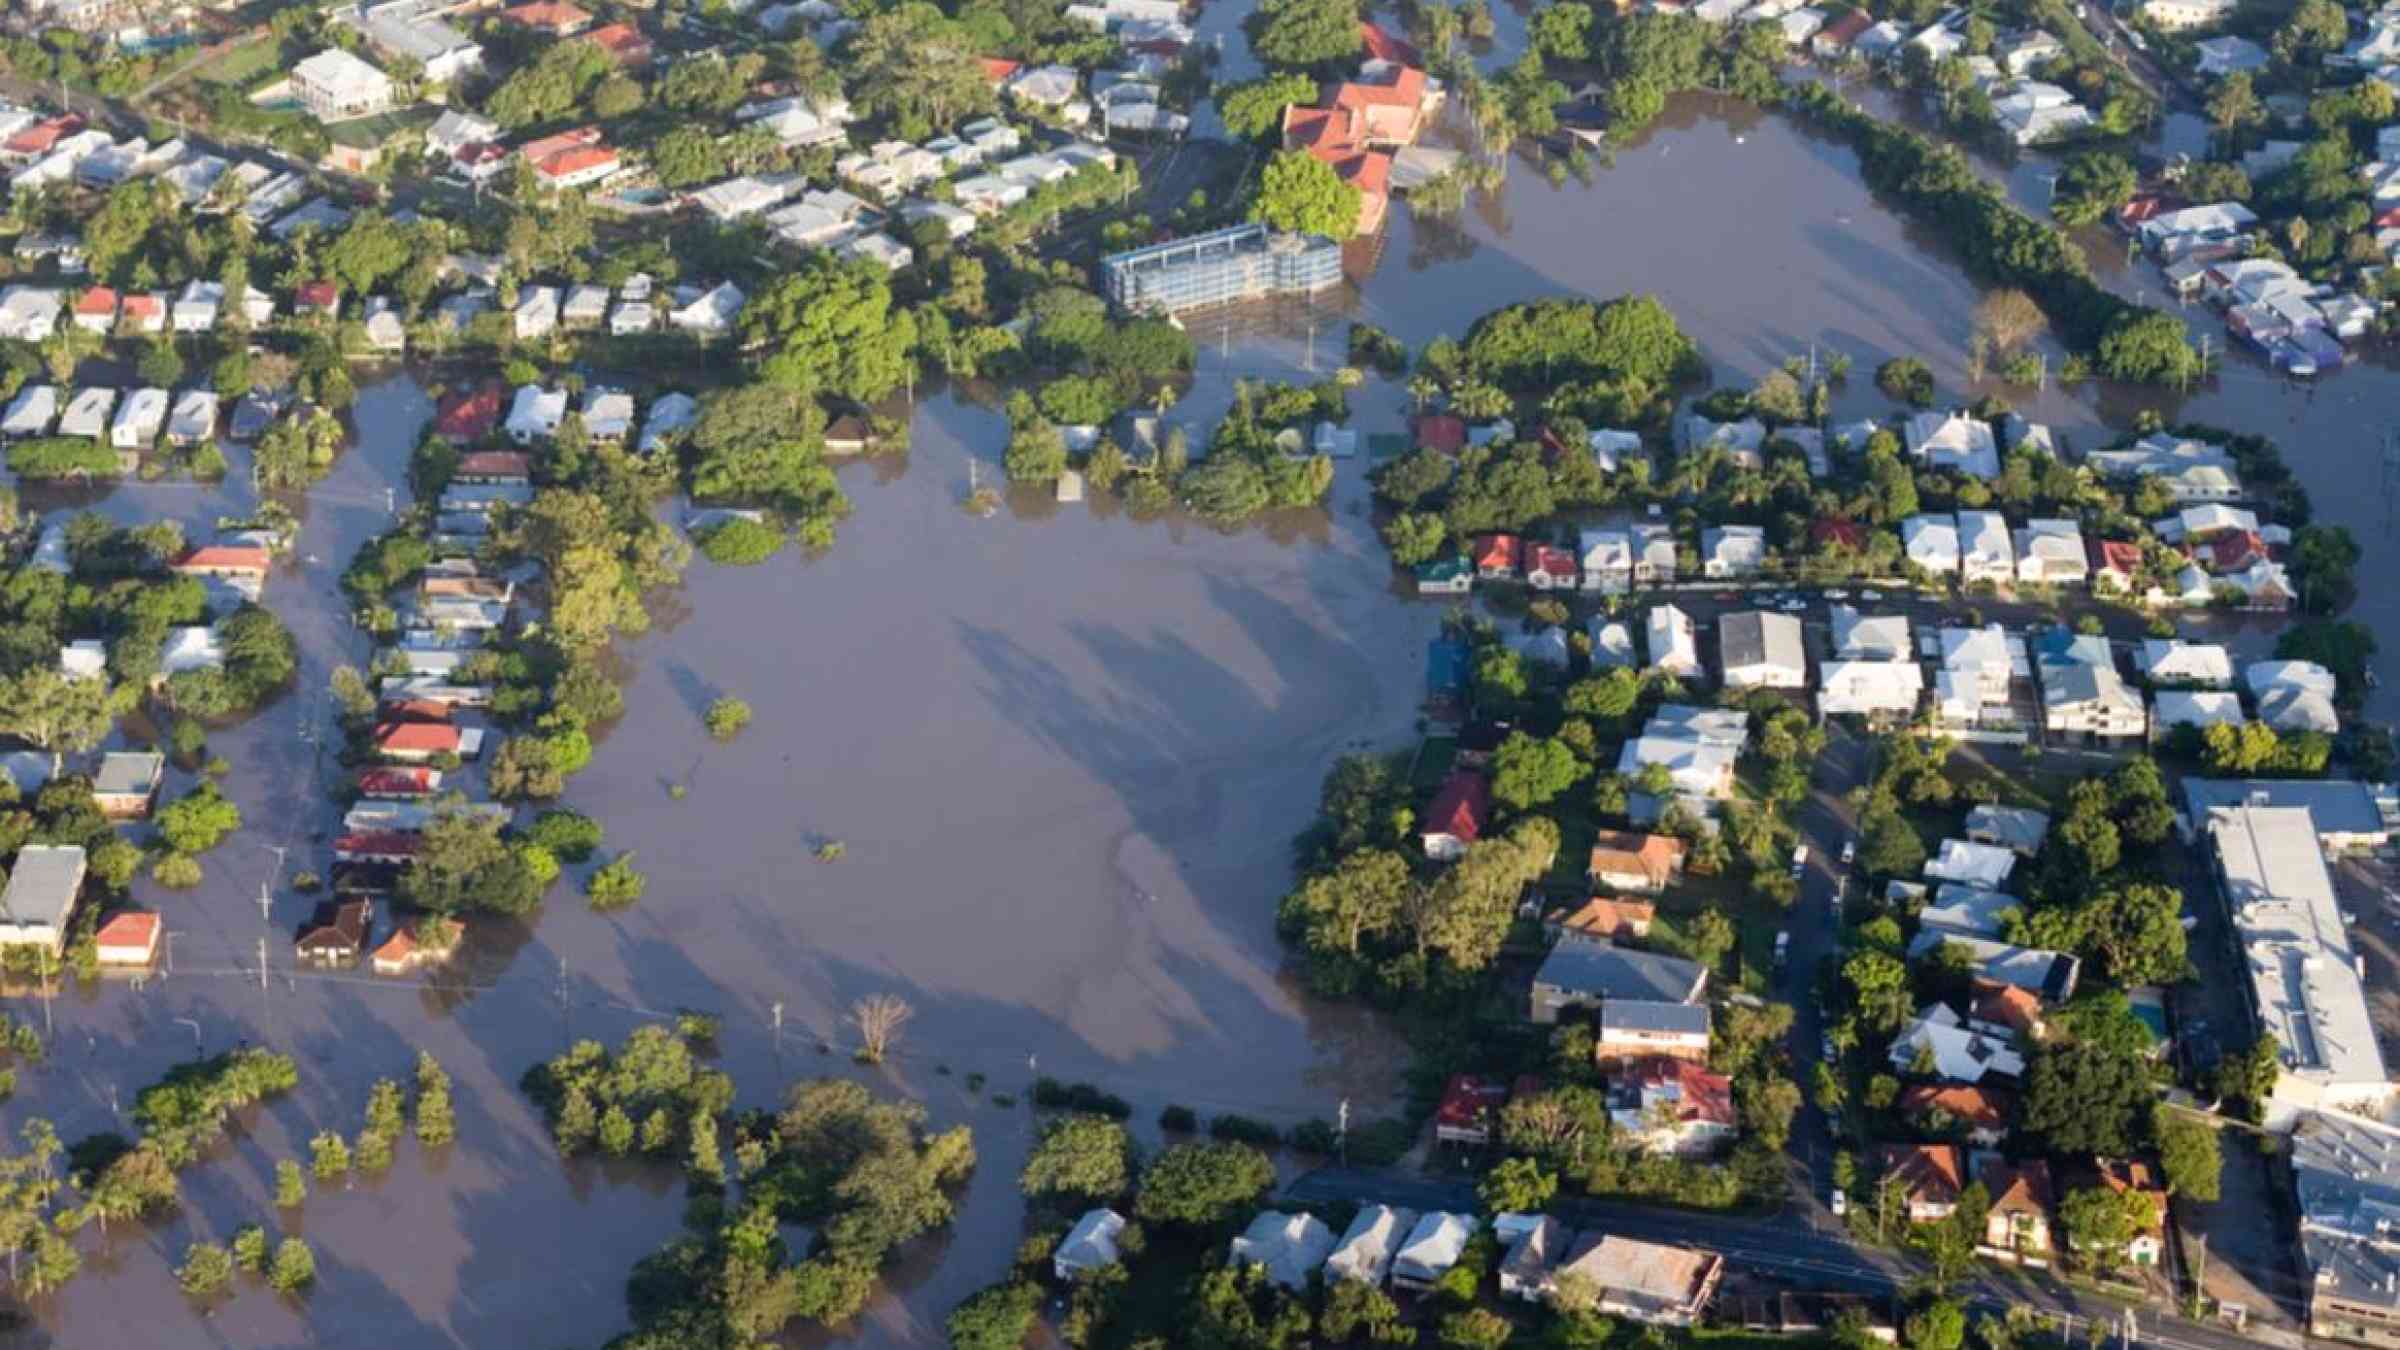 Flooding of Brisbane, Australia in January 2011. Brisbane/Shutterstock